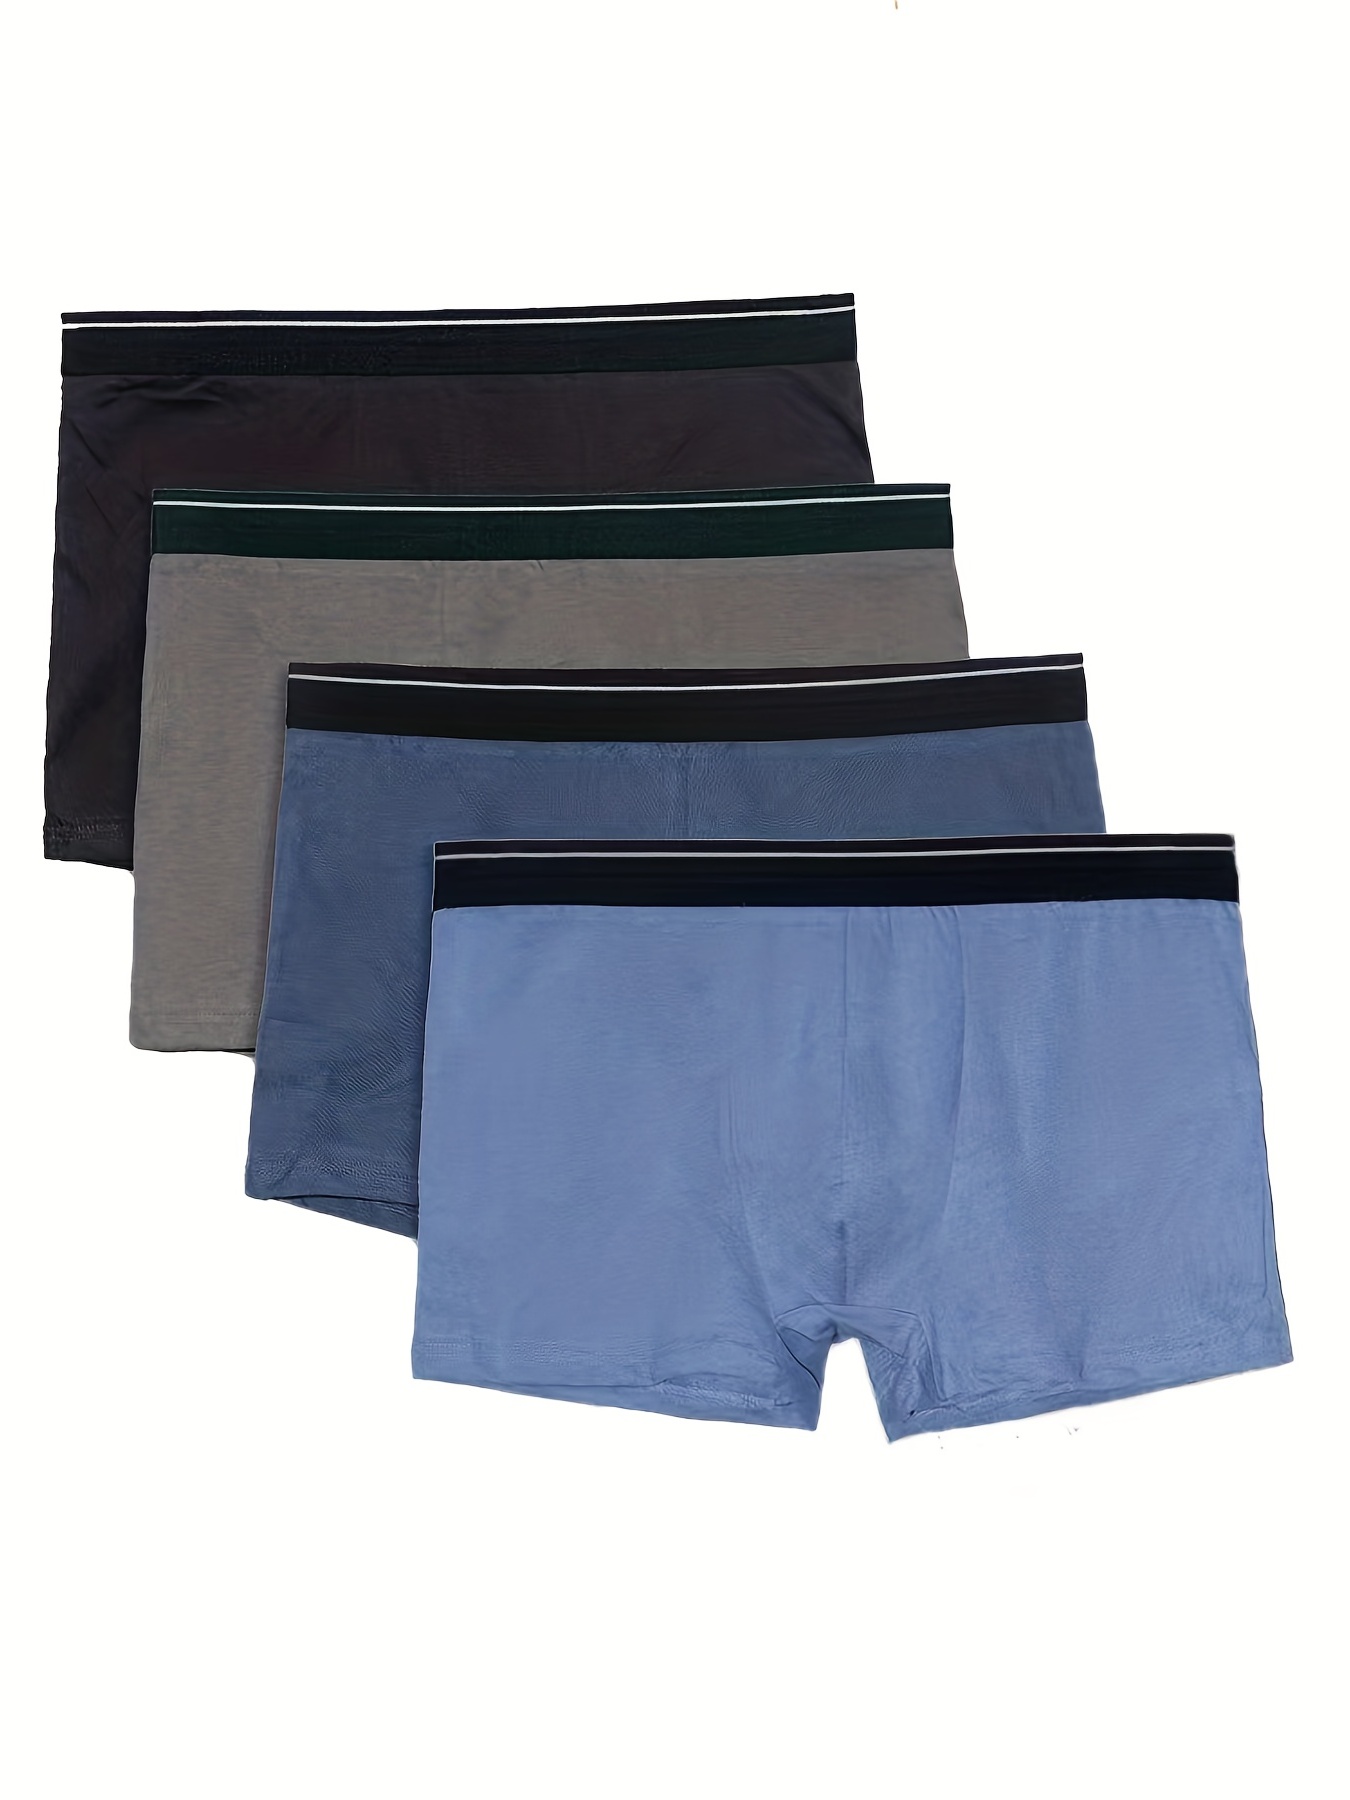 4PCS Men Breathable Boxer Panties Loose Cotton Antibacterial